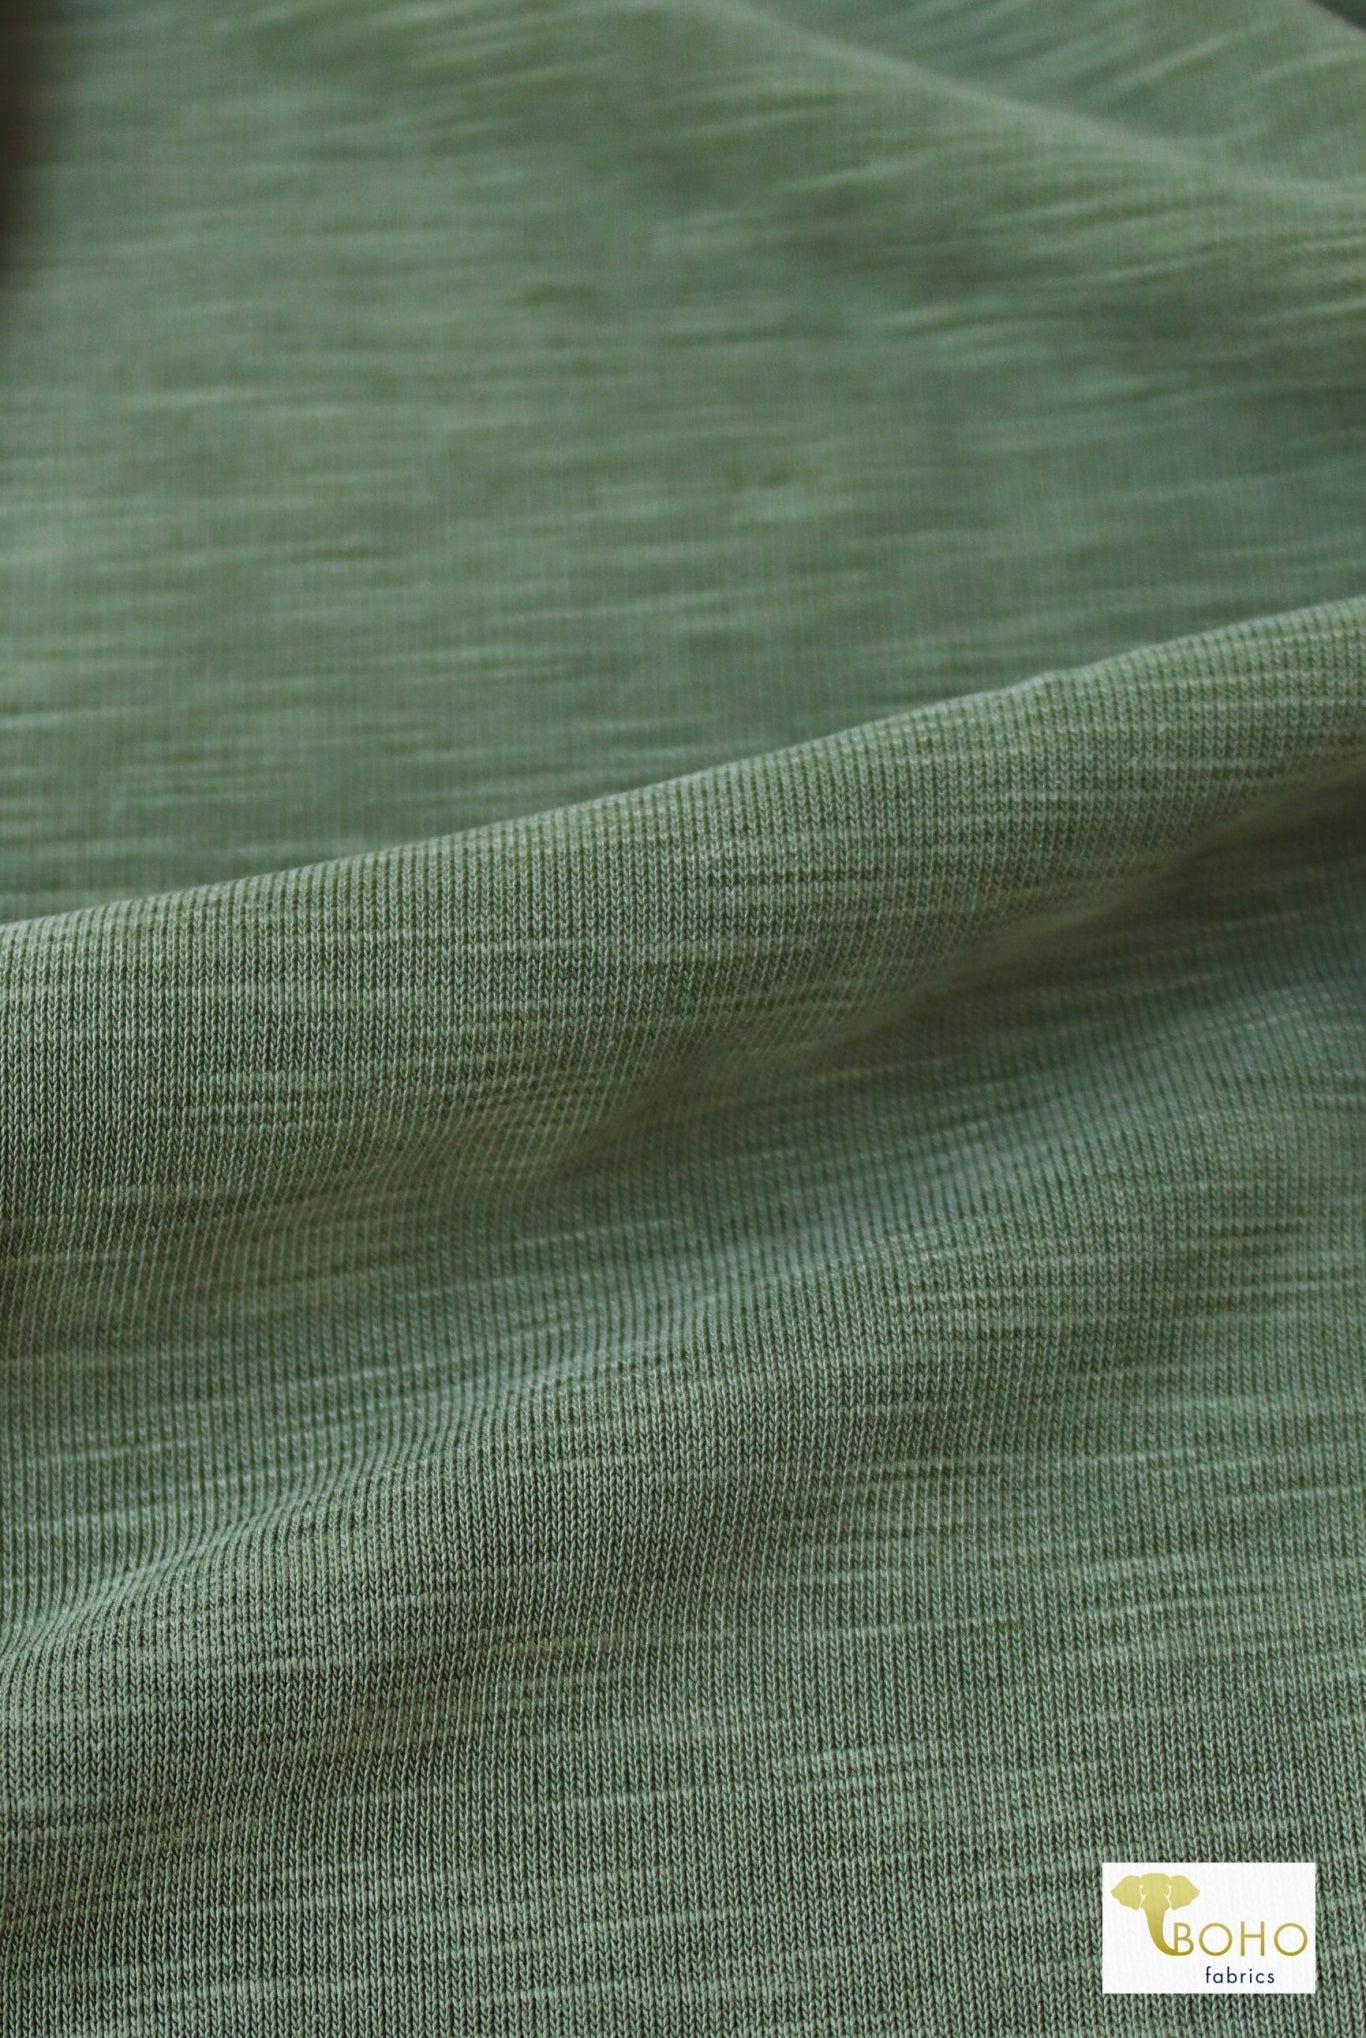 Slub, Olive Green, Cupro Knit - Boho Fabrics